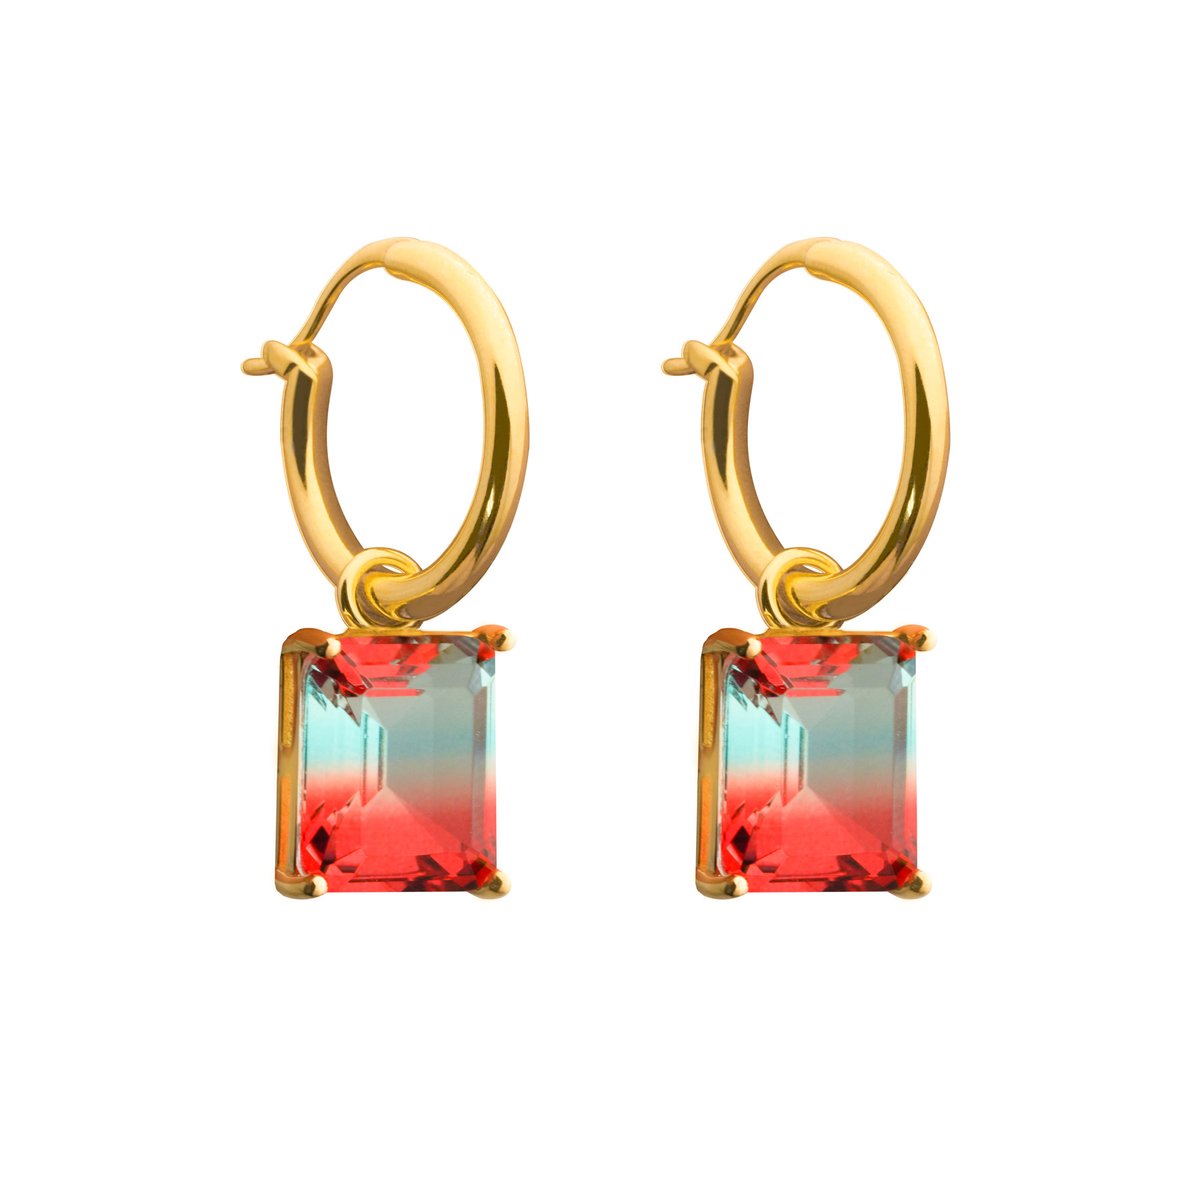 Do you like 😊sweet cubic suger? $10.48

buff.ly/3FbQ3Yk

#cubiczirconia #cubicearrings #earrings #jewels #jewelry #jewellery #jewelery #silverbene #jewelryaddict  #womenfashion #fashion #women #wholesaler #retailer #suger #colorfulcubic #cubiczirconiaearrings